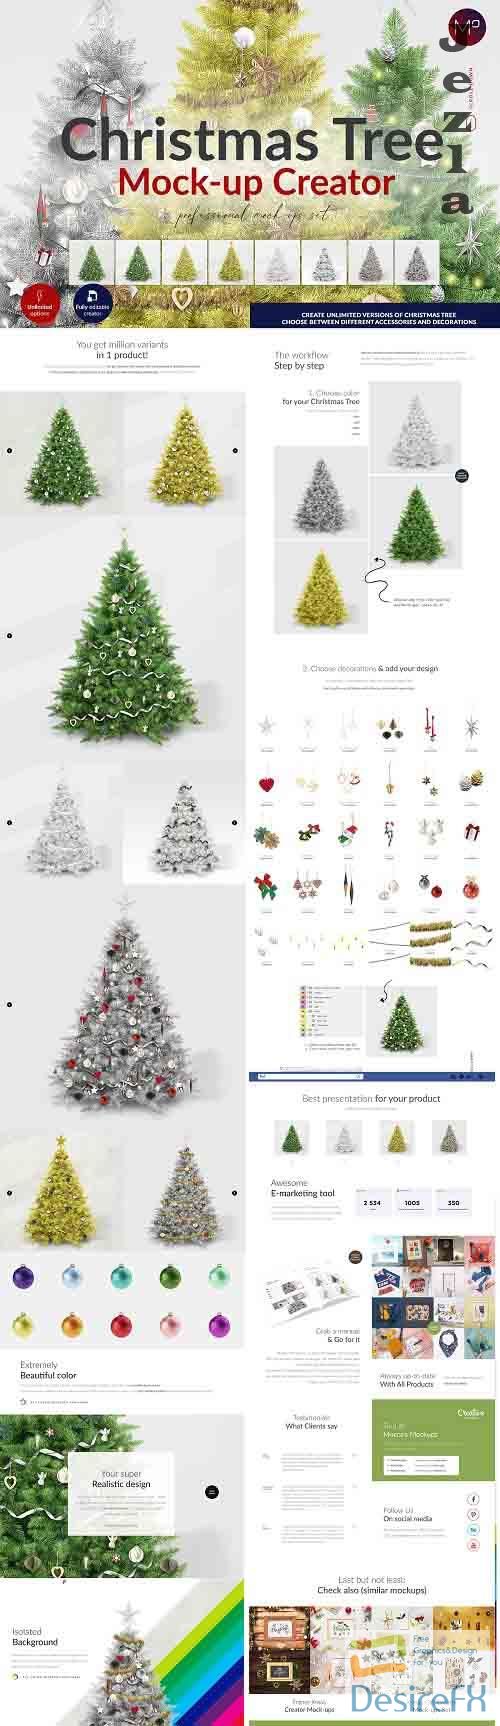 CreativeMarket - Christmas Tree Creator Mock-up 5580357